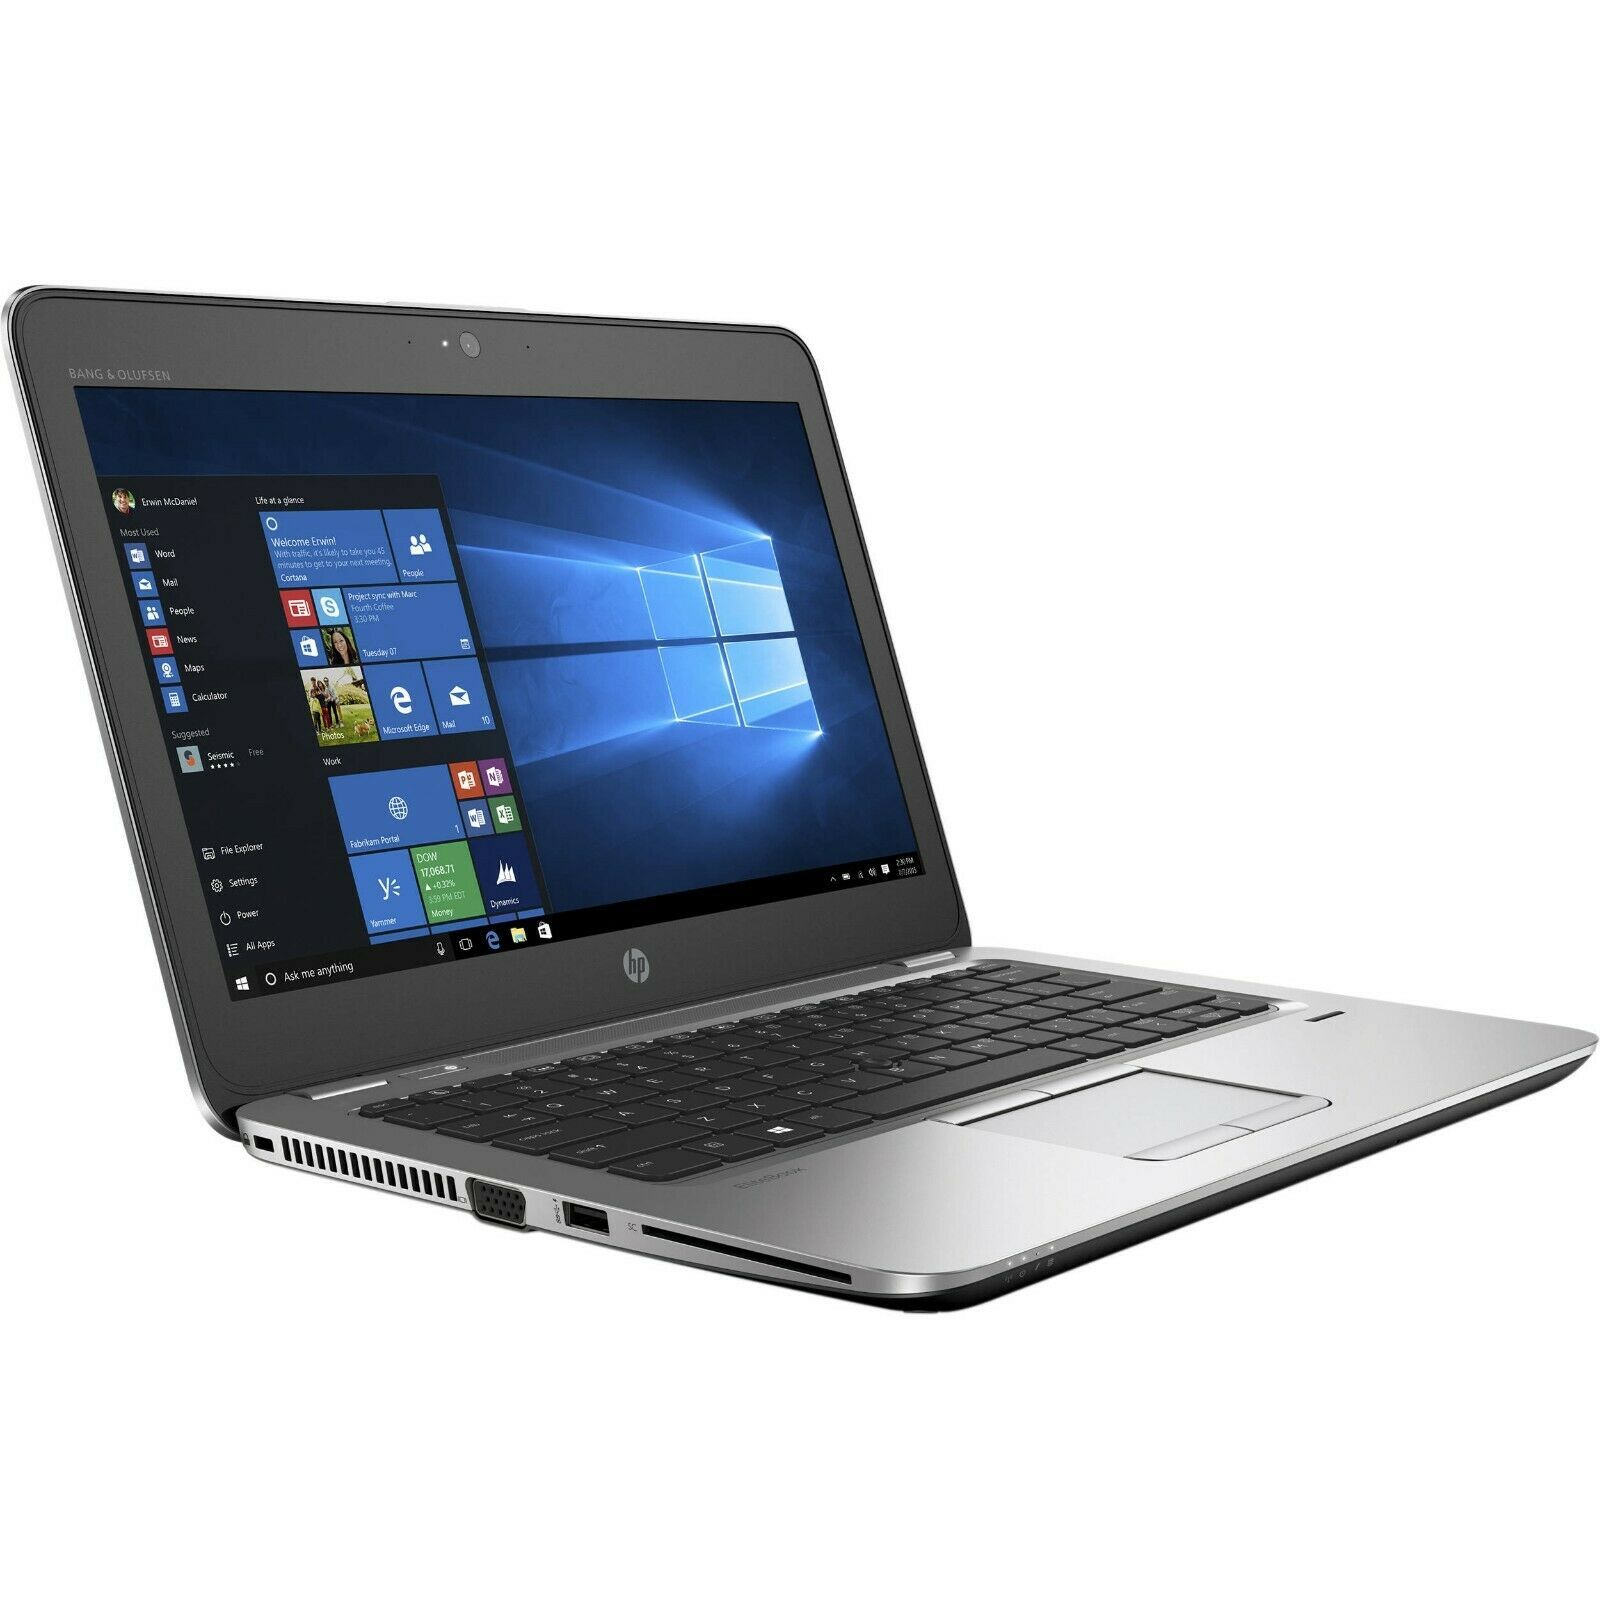 HP EliteBook 820 G3 Intel i7 6600U 2.60GHz 8GB RAM 500GB SSD 12.5" Win 10 Image 2